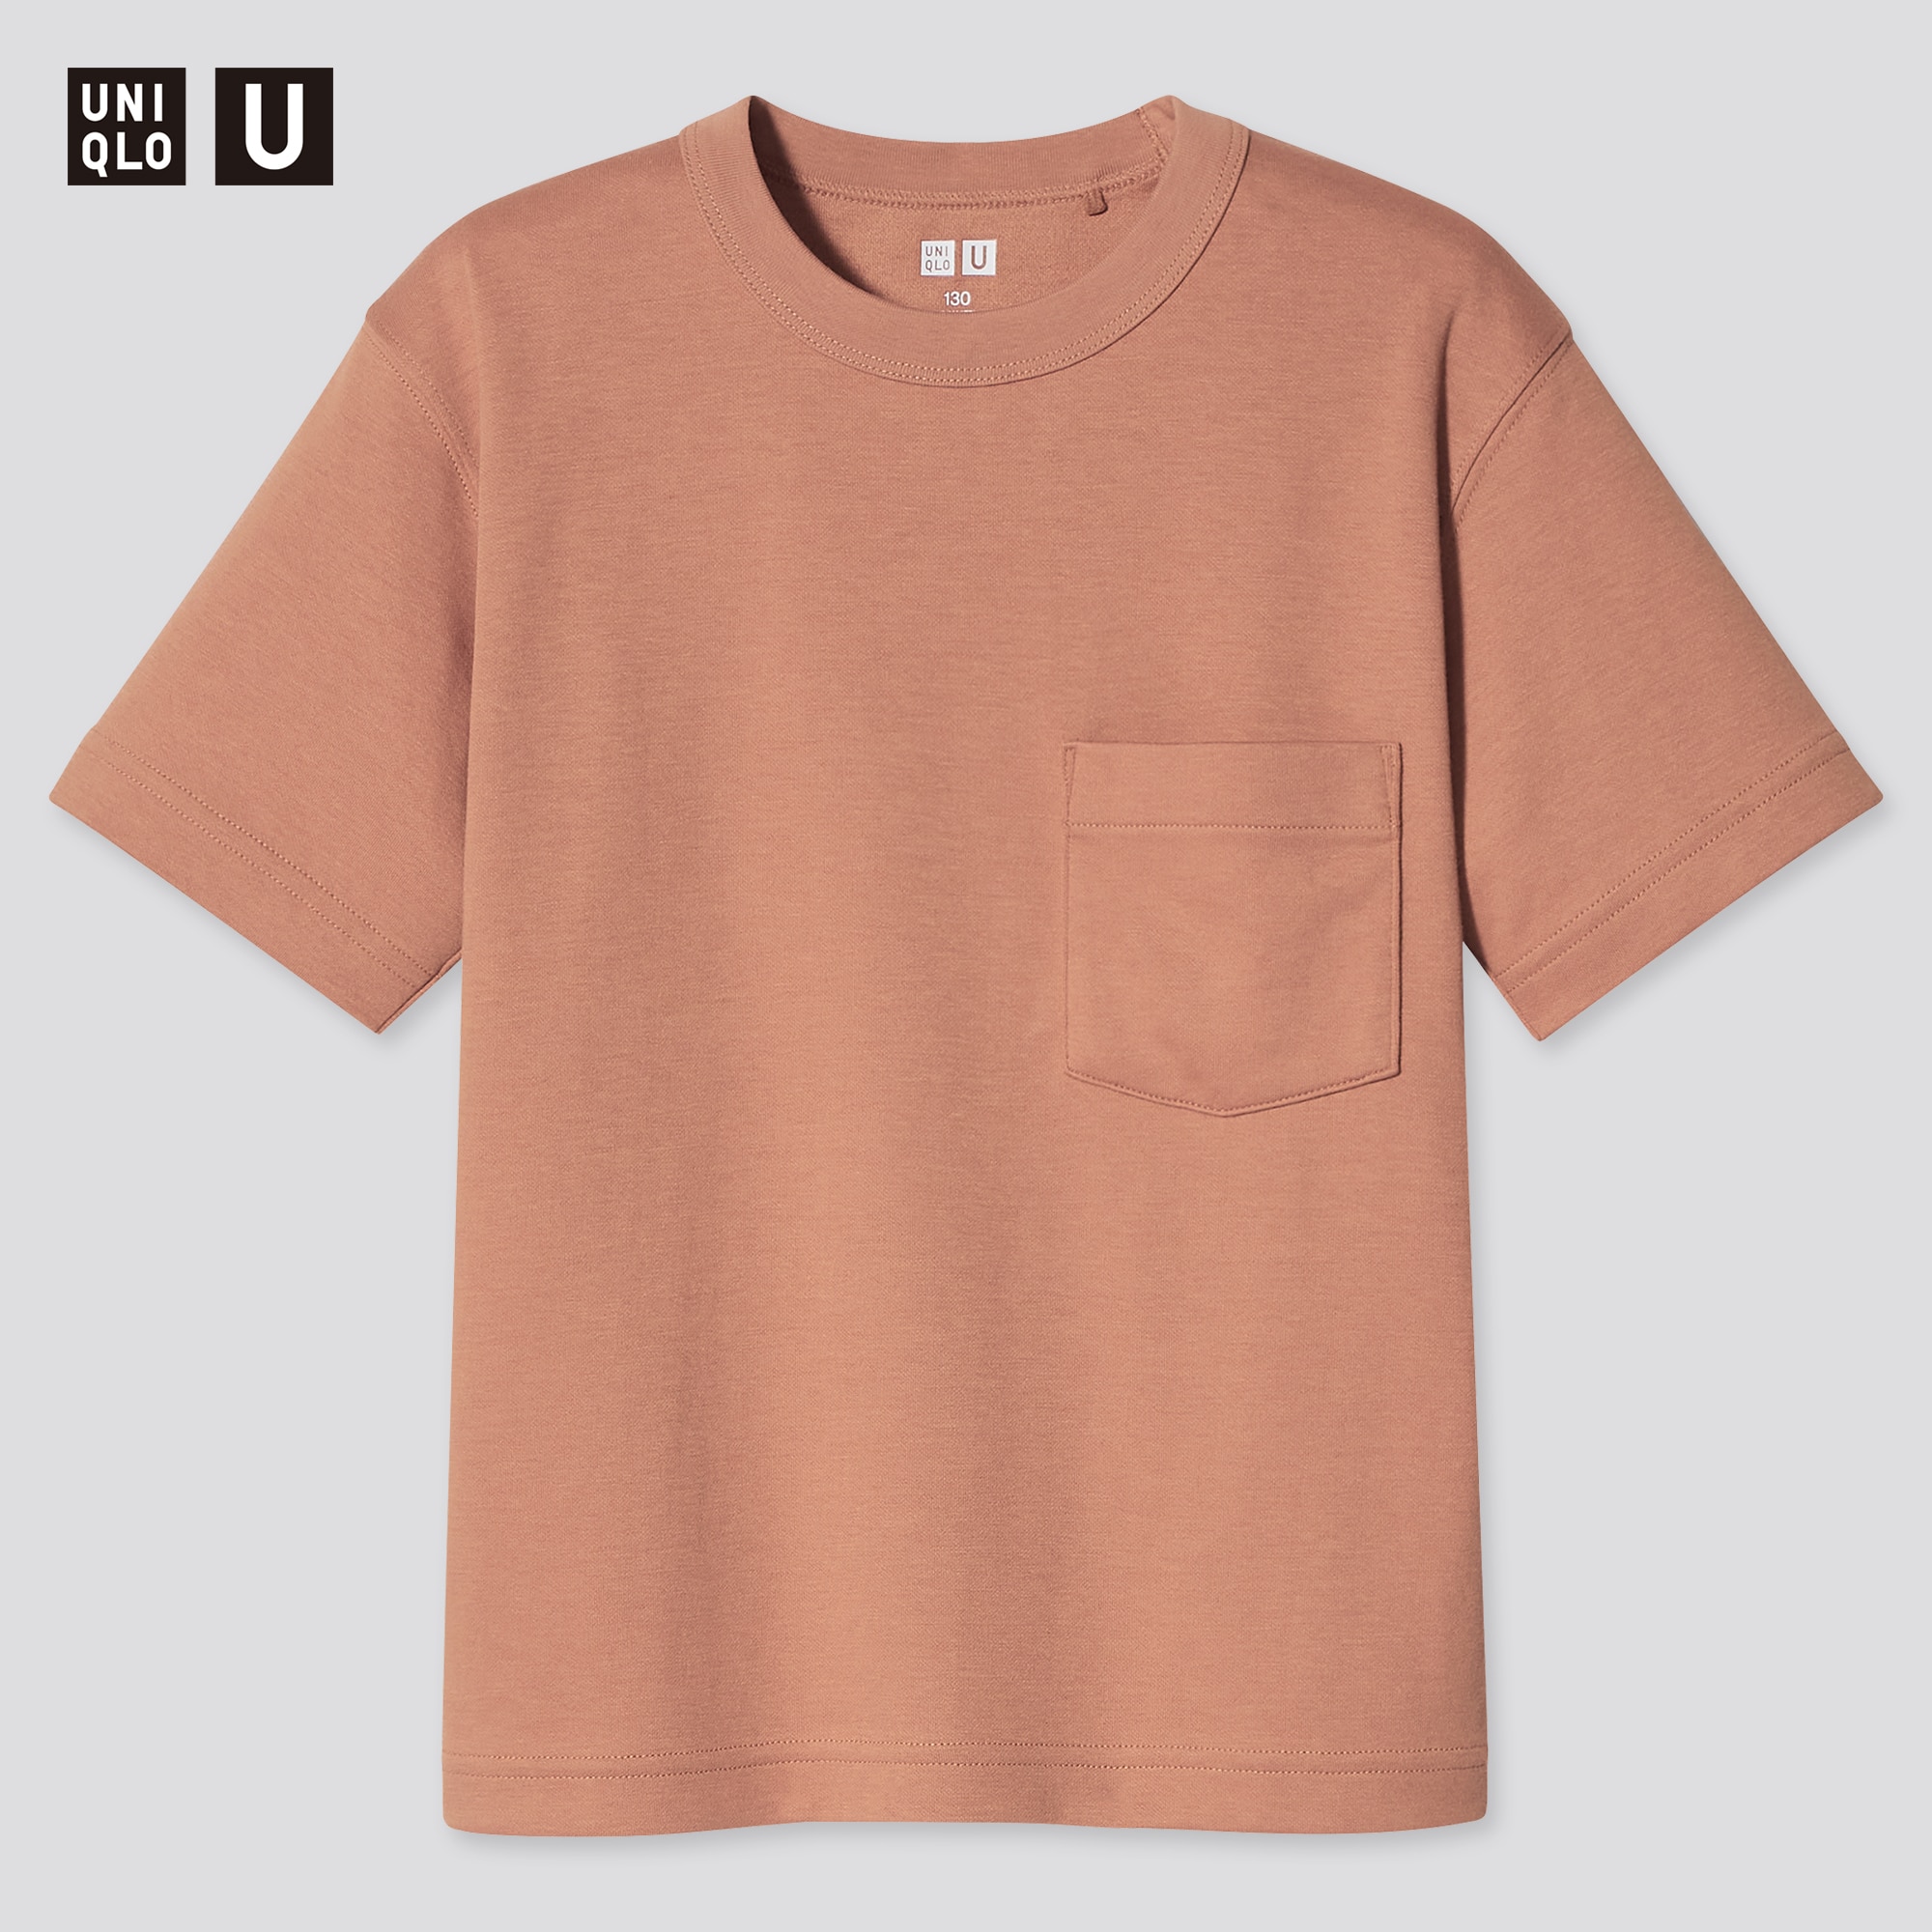 UNIQLO U AIRism Cotton Crew Neck Short-Sleeve T-Shirt